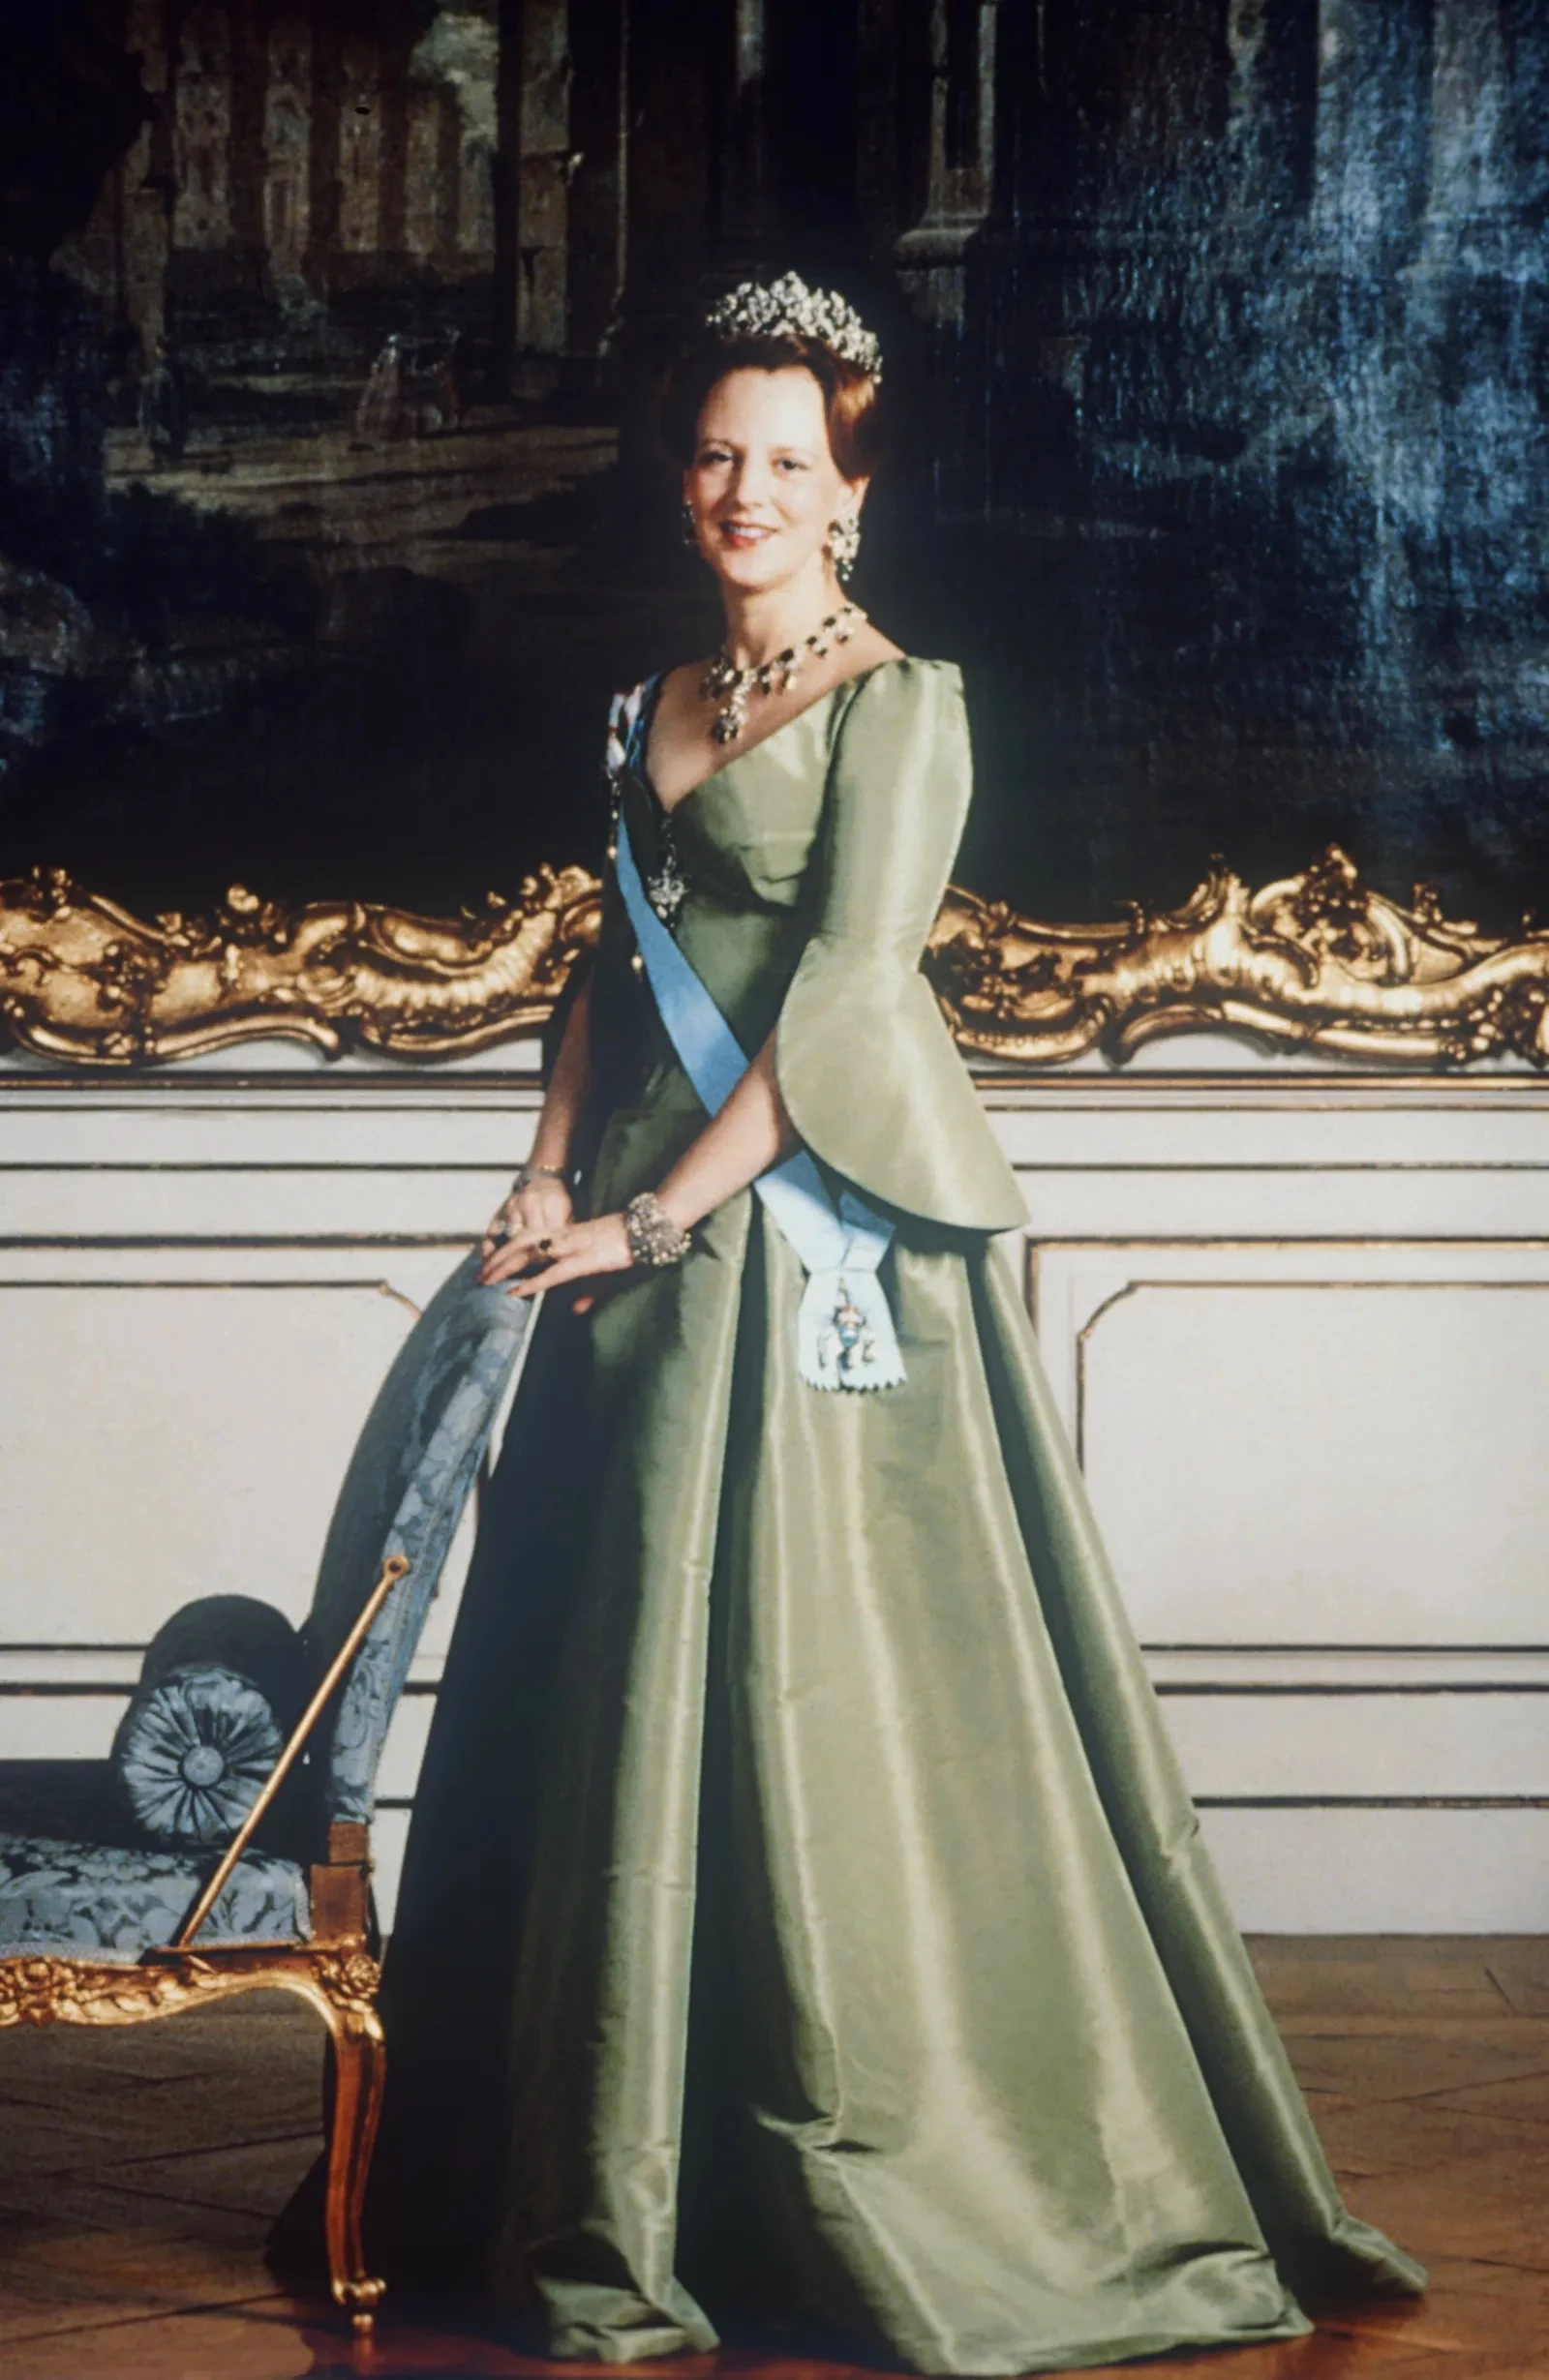 Портрет на честь 40-річчя королеви, 1980